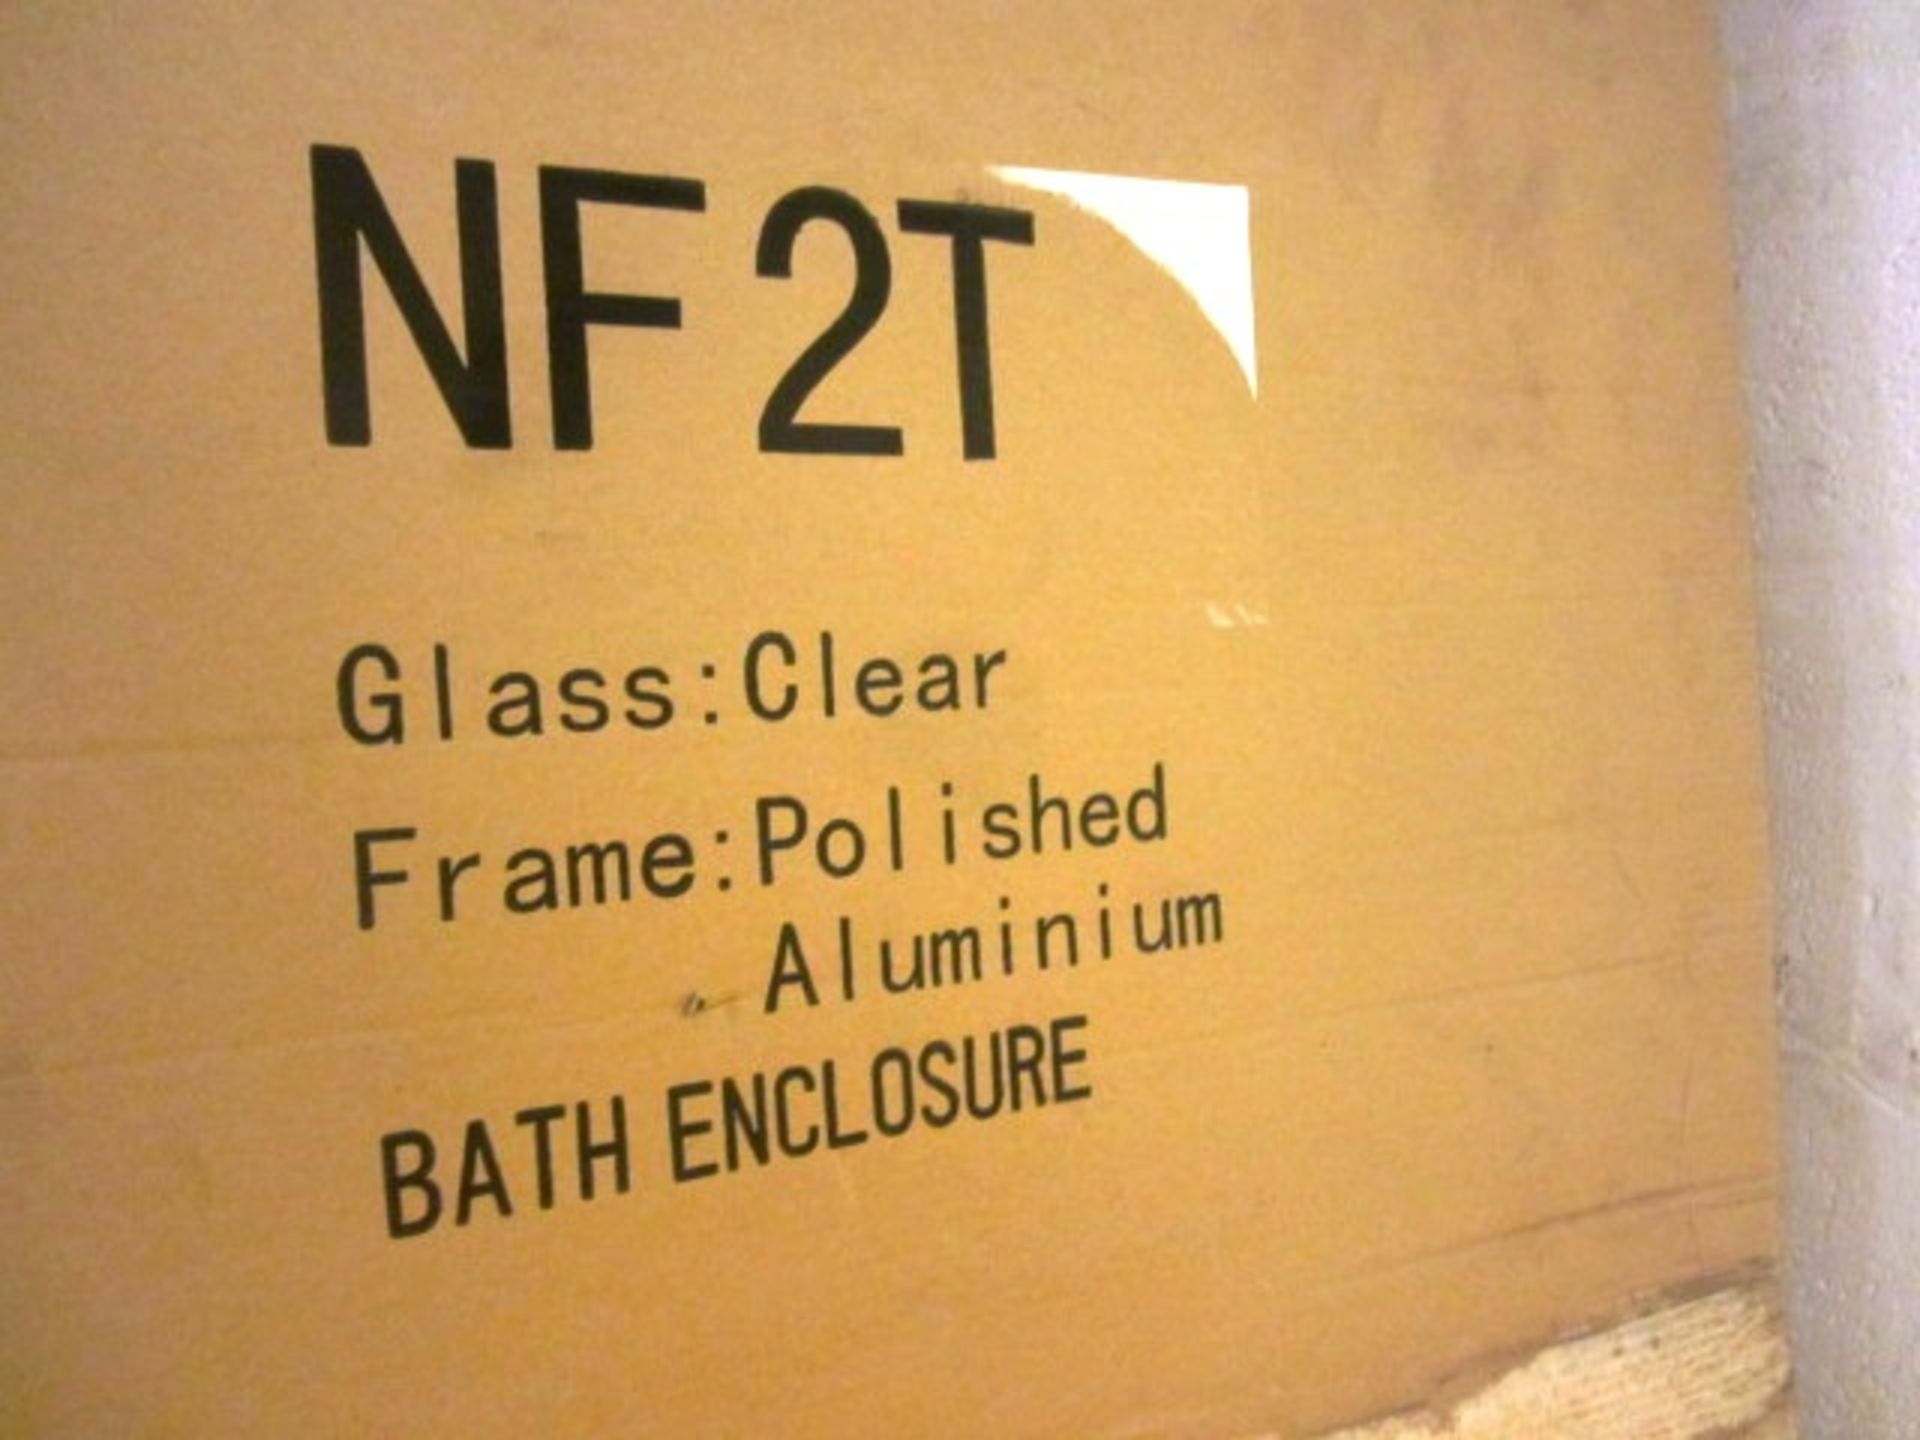 Polished aluminium clear glass bath enclosure, 1200mm x 800mm - Image 2 of 3